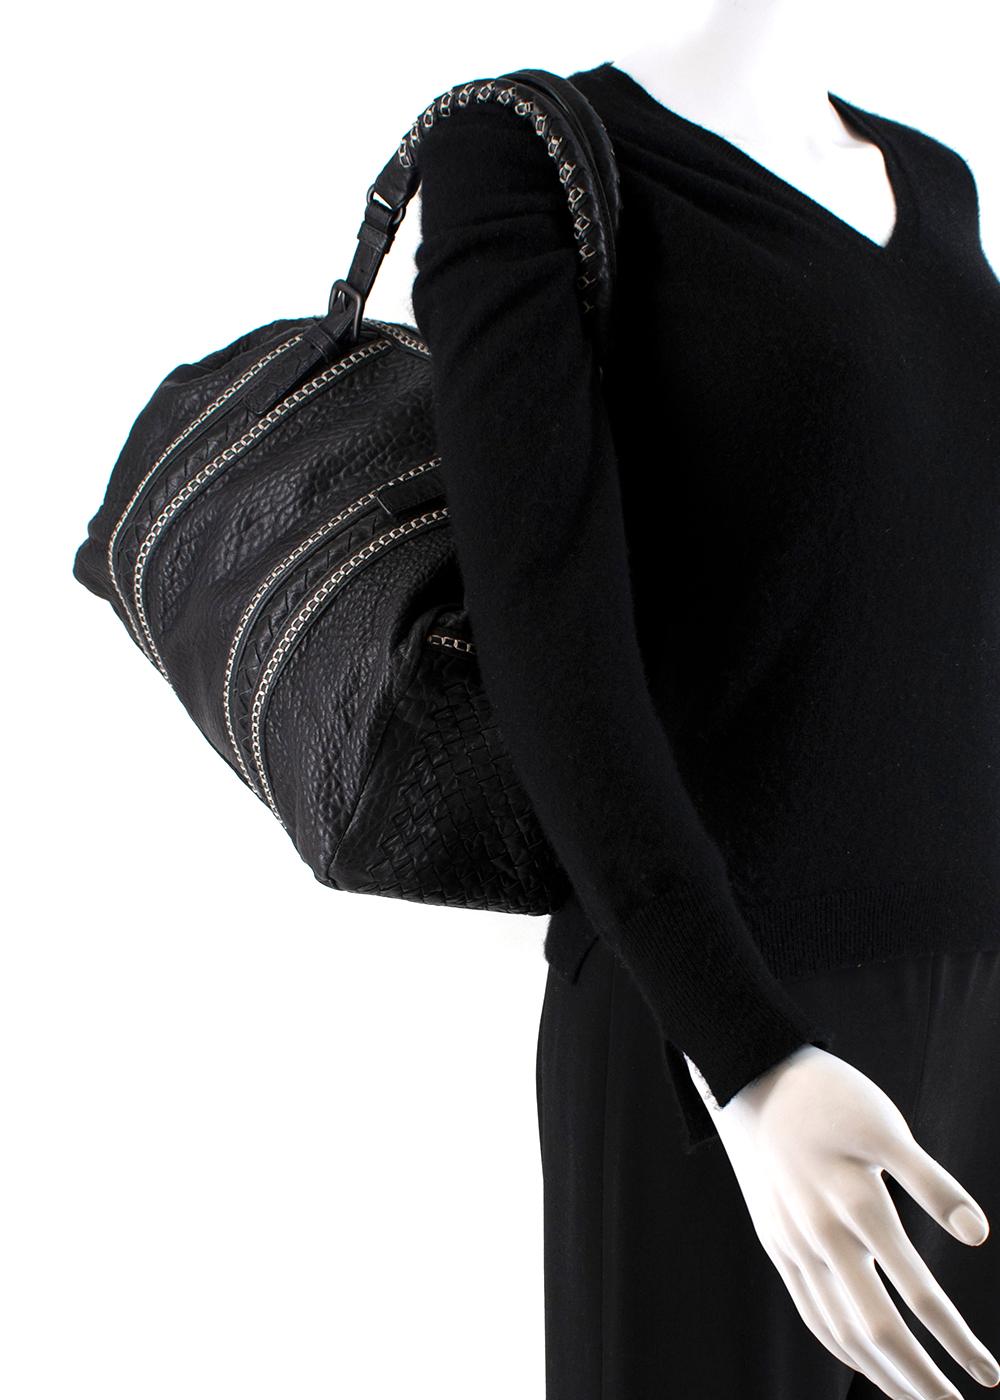 Bottega Veneta Black Grained Leather Intrecciato Detail Handbag For Sale 4